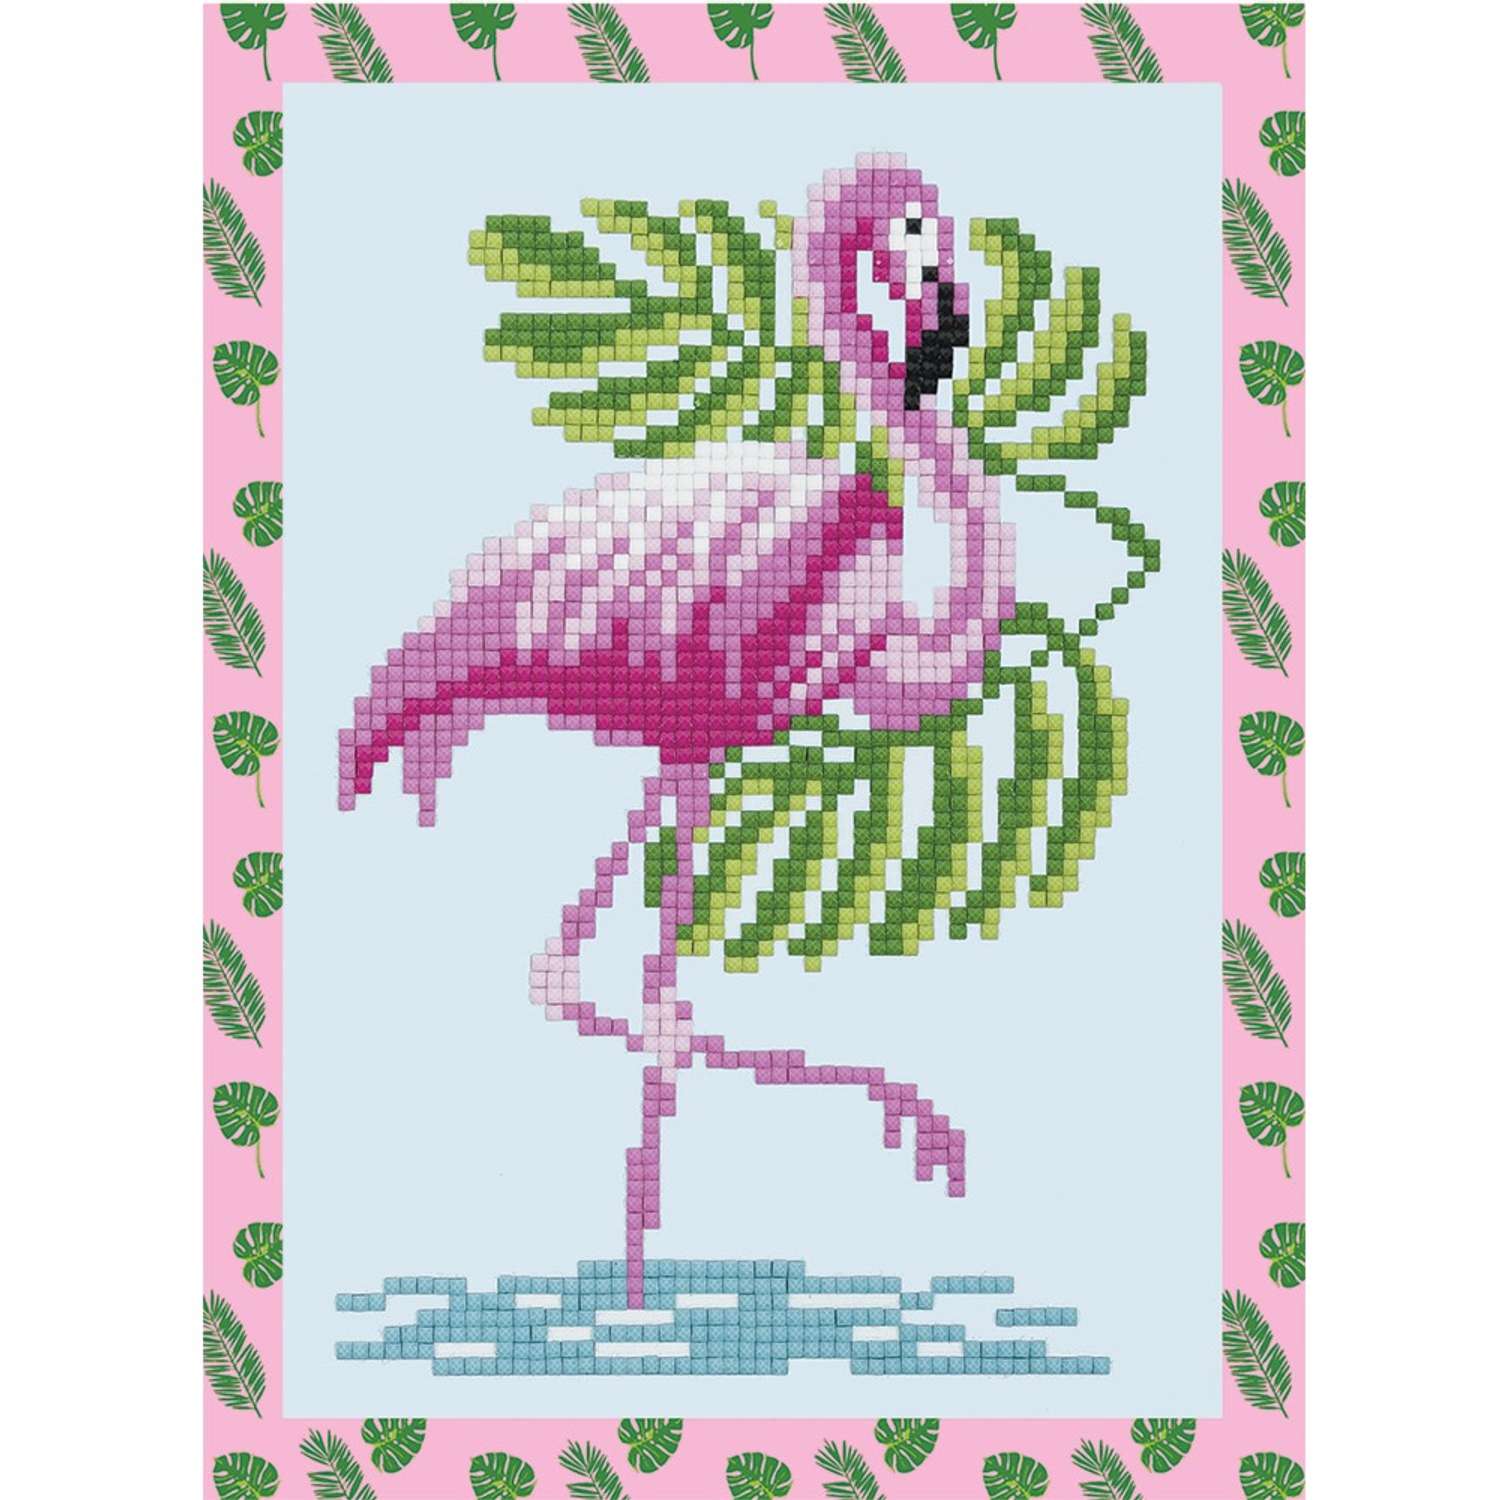 Кристальная мозаика Фрея ALVS-019 мини-картинка Фламинго 19.5 х 14 см - фото 2